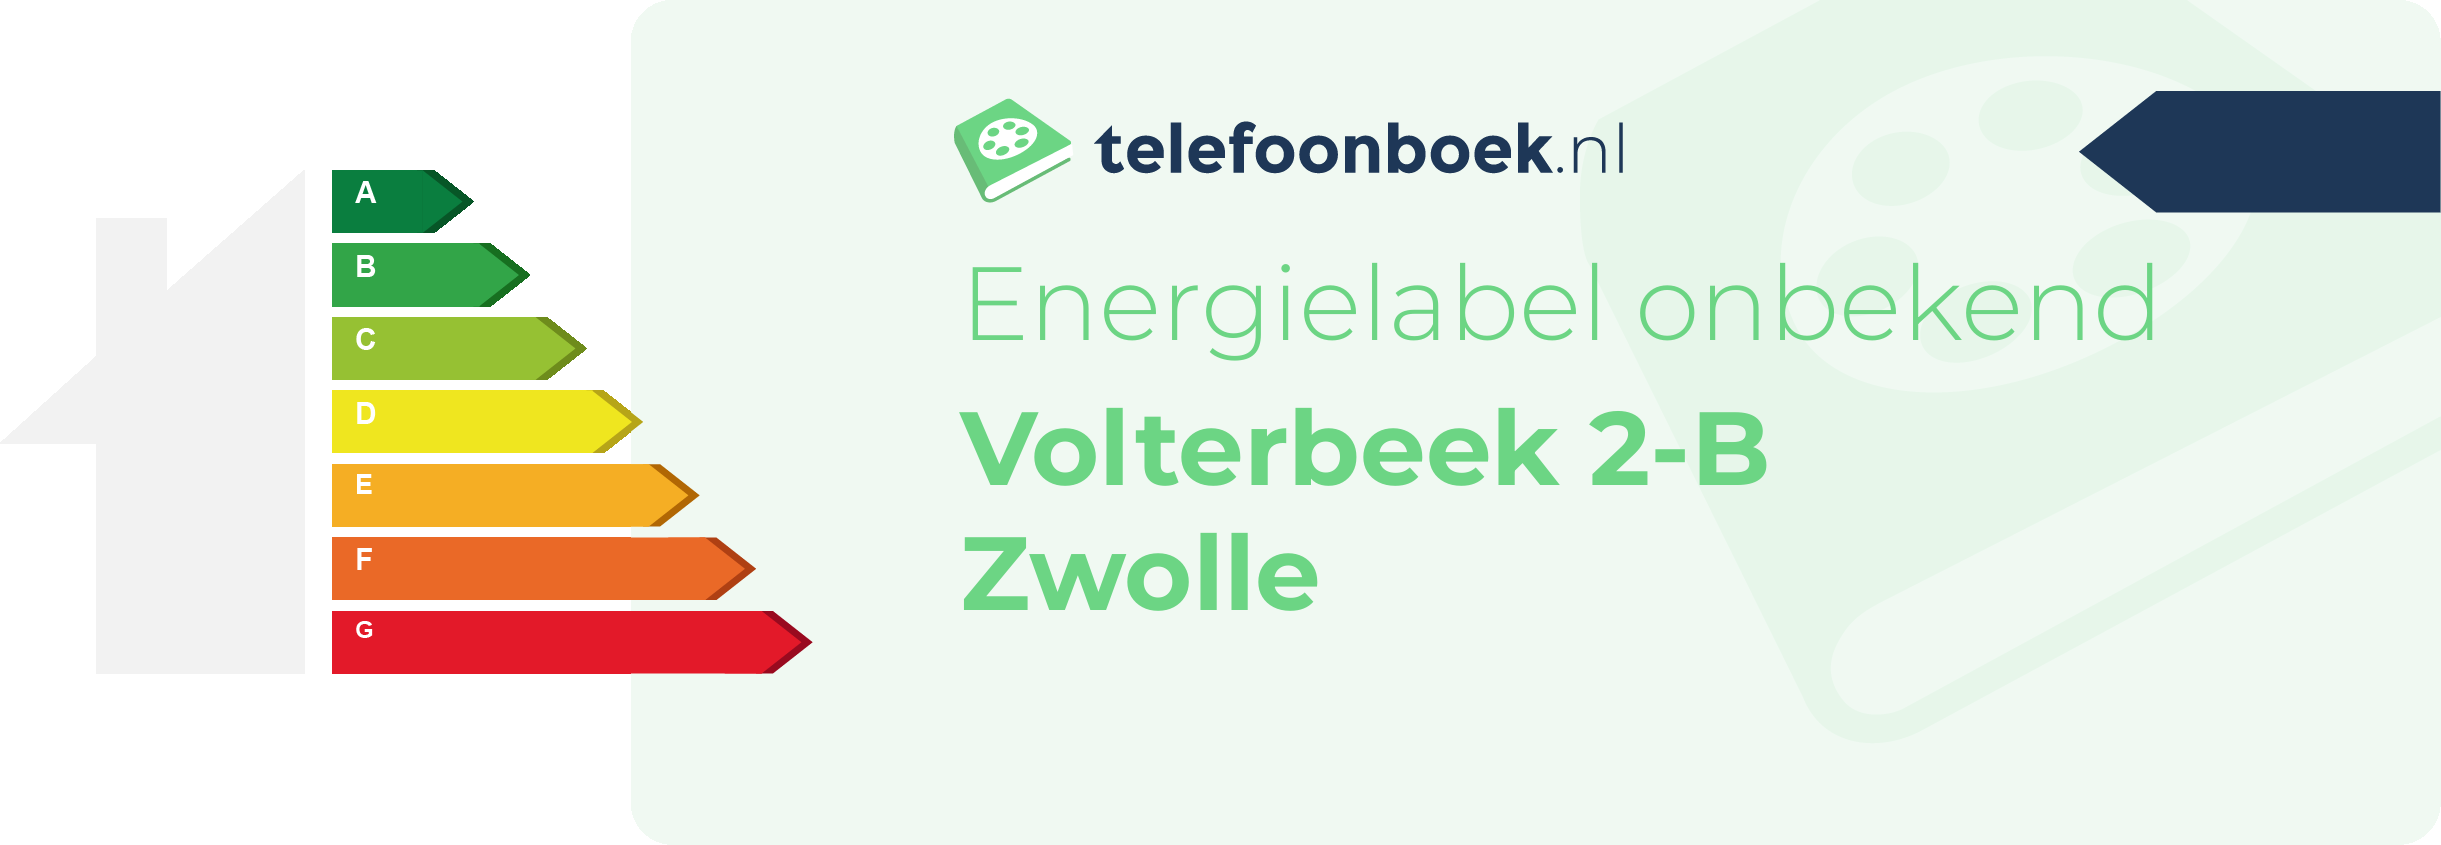 Energielabel Volterbeek 2-B Zwolle